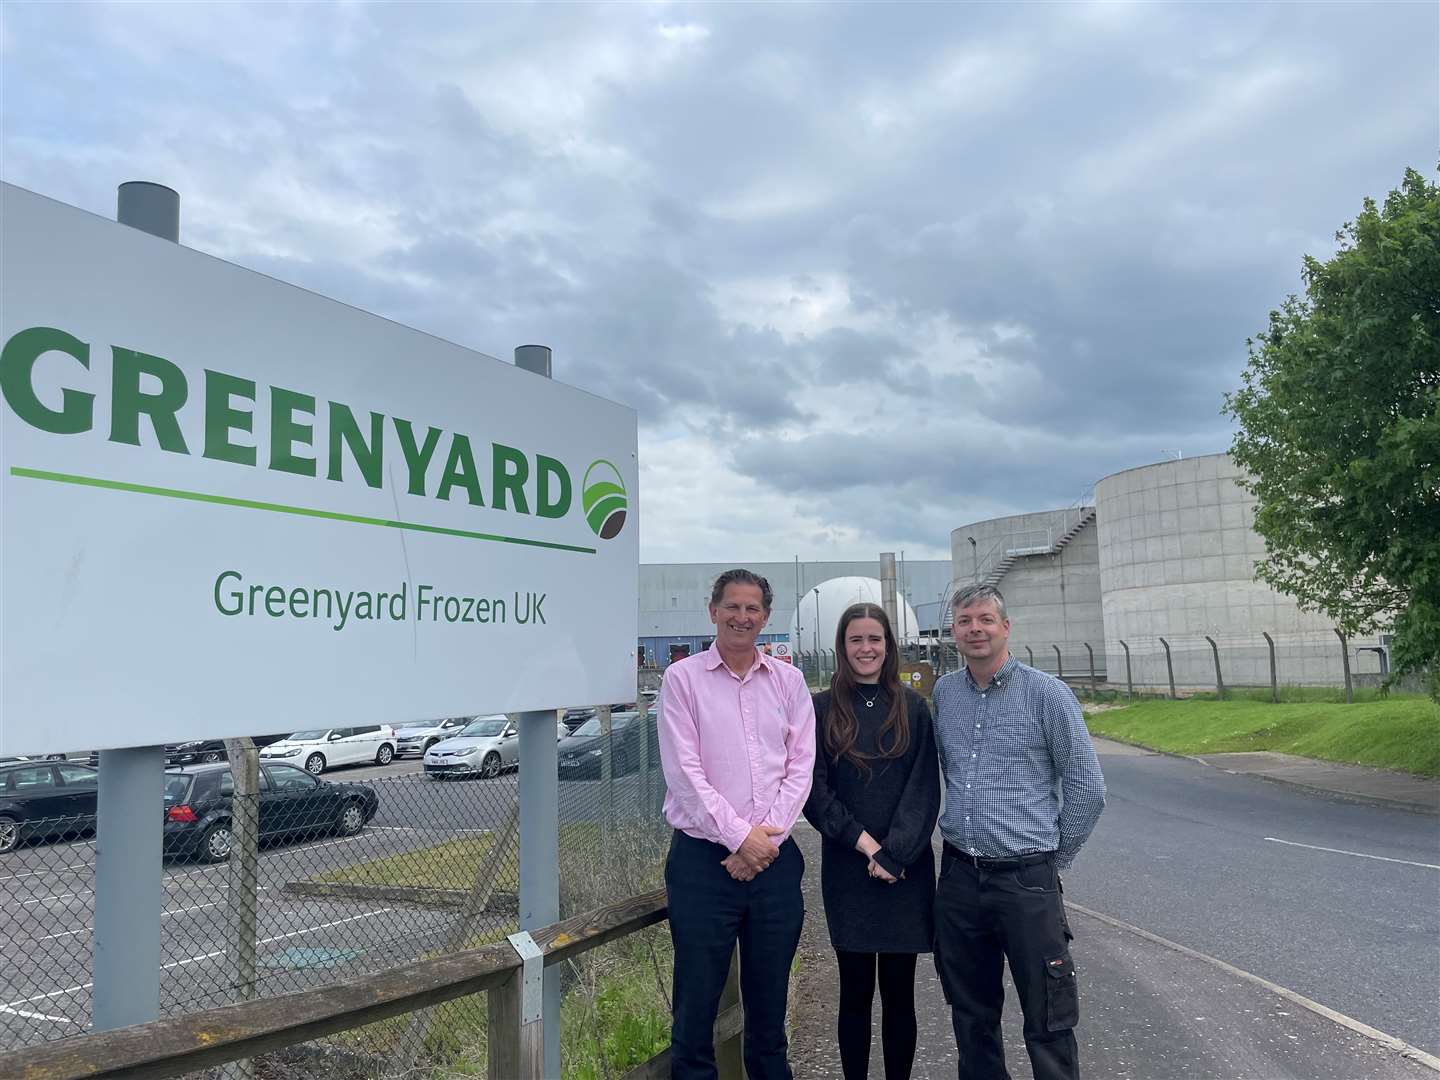 Greenyard Frozen UK's sustainability team - Neil Winner, Ellie Wood and Ben Parsons